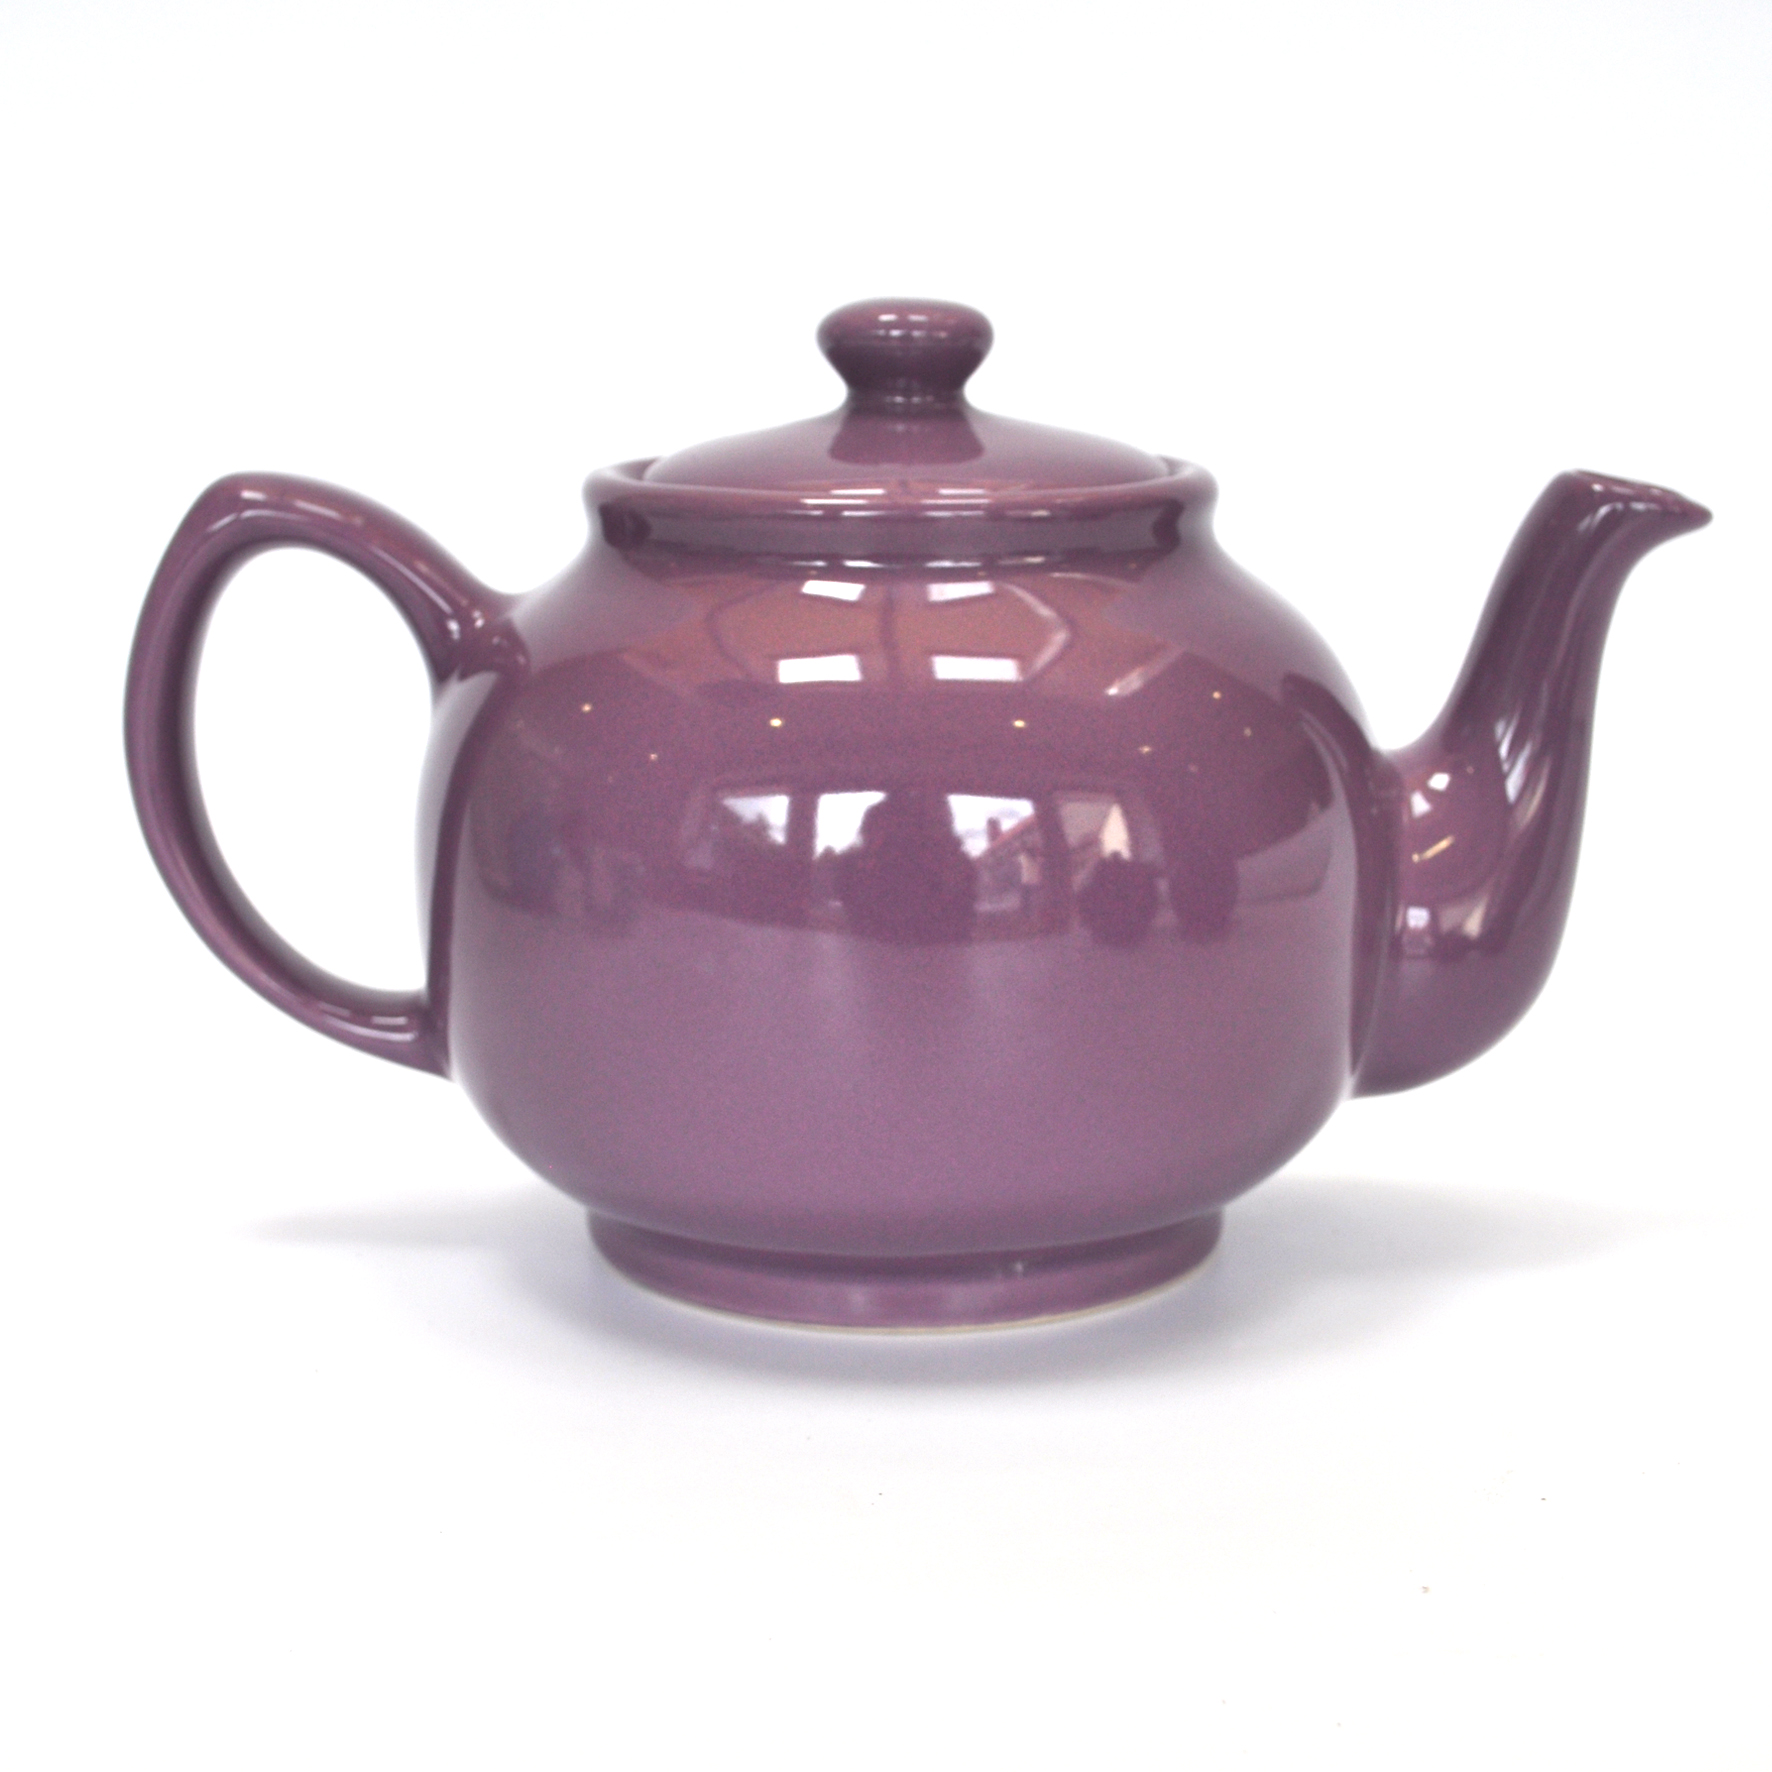 Teapot - The TeaShed